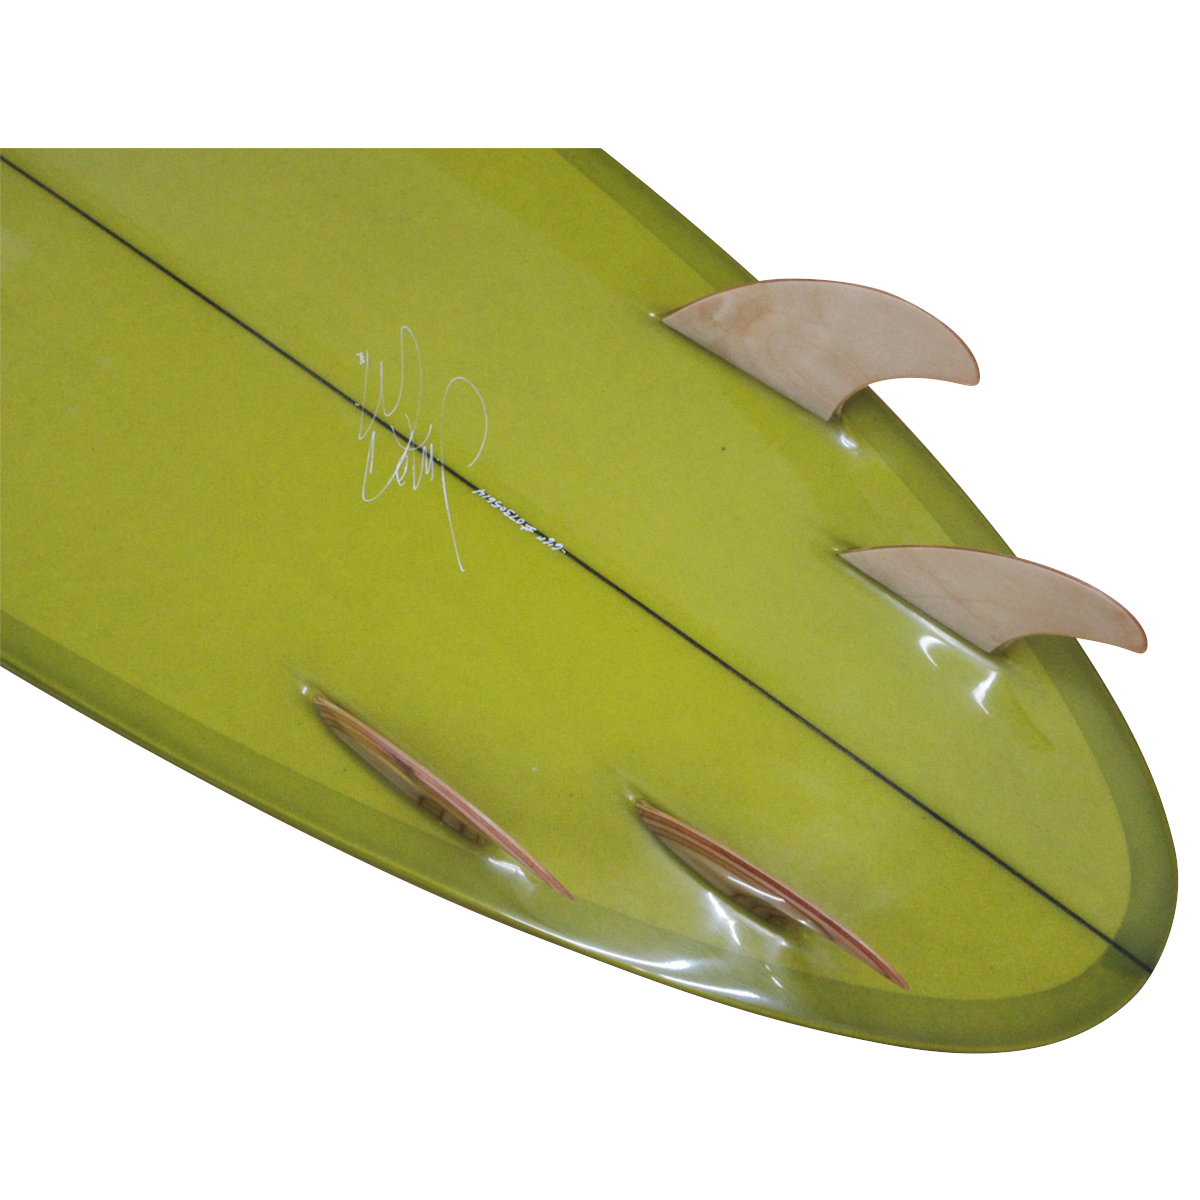 Mccallum Surfboards  / Upside Down Egg 6'6 Shaped By Jeff Mccallum